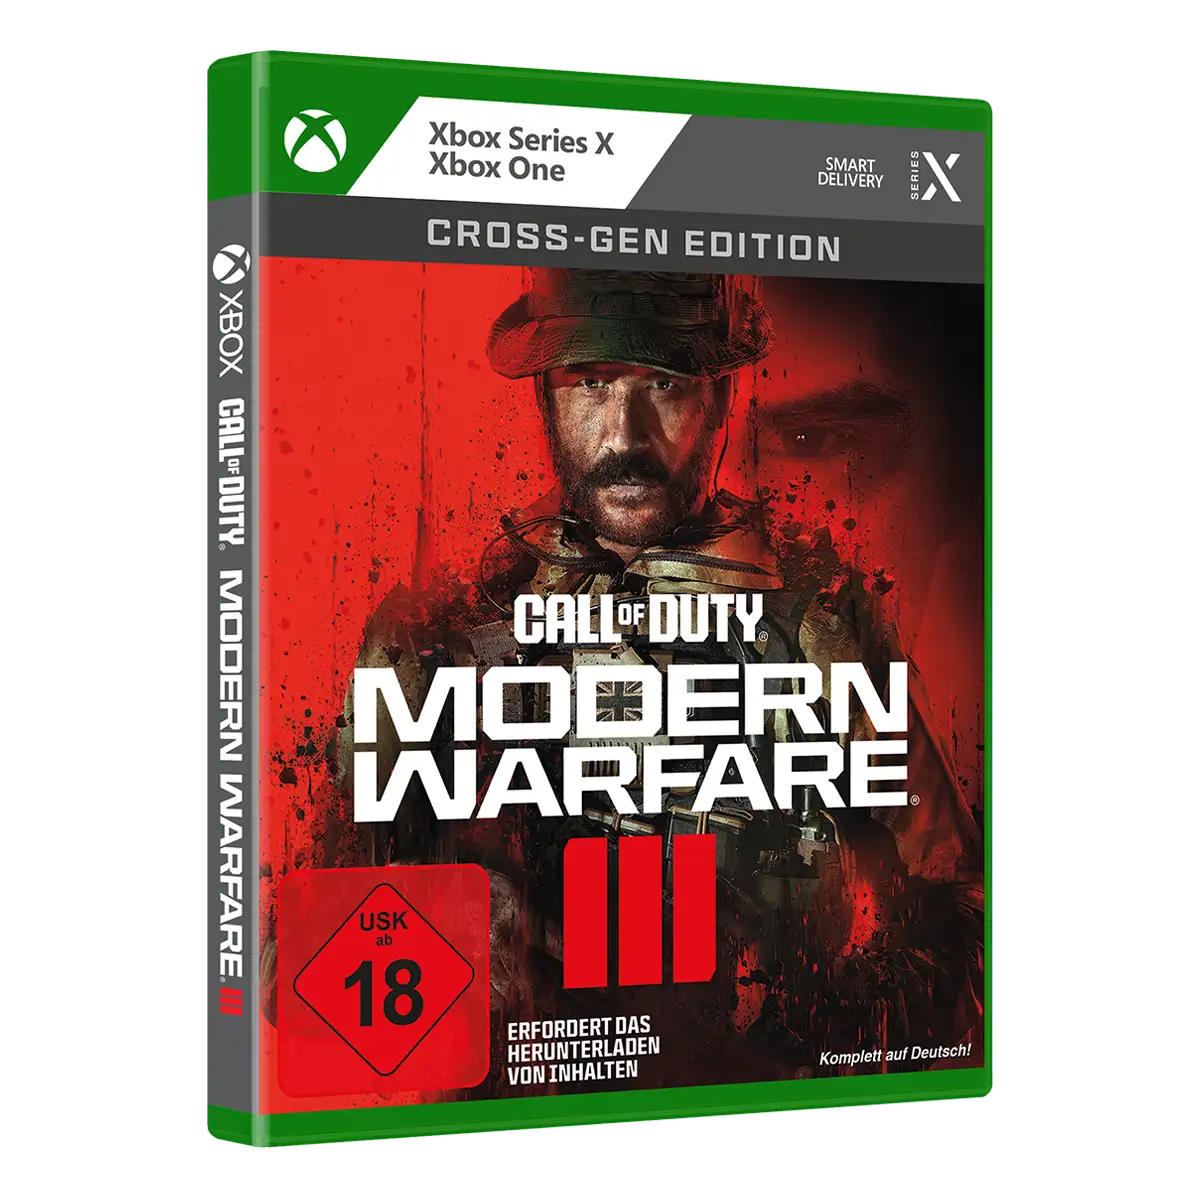 Call of Duty: Modern Warfare III (Xbox One / Xbox Series X) Image 2